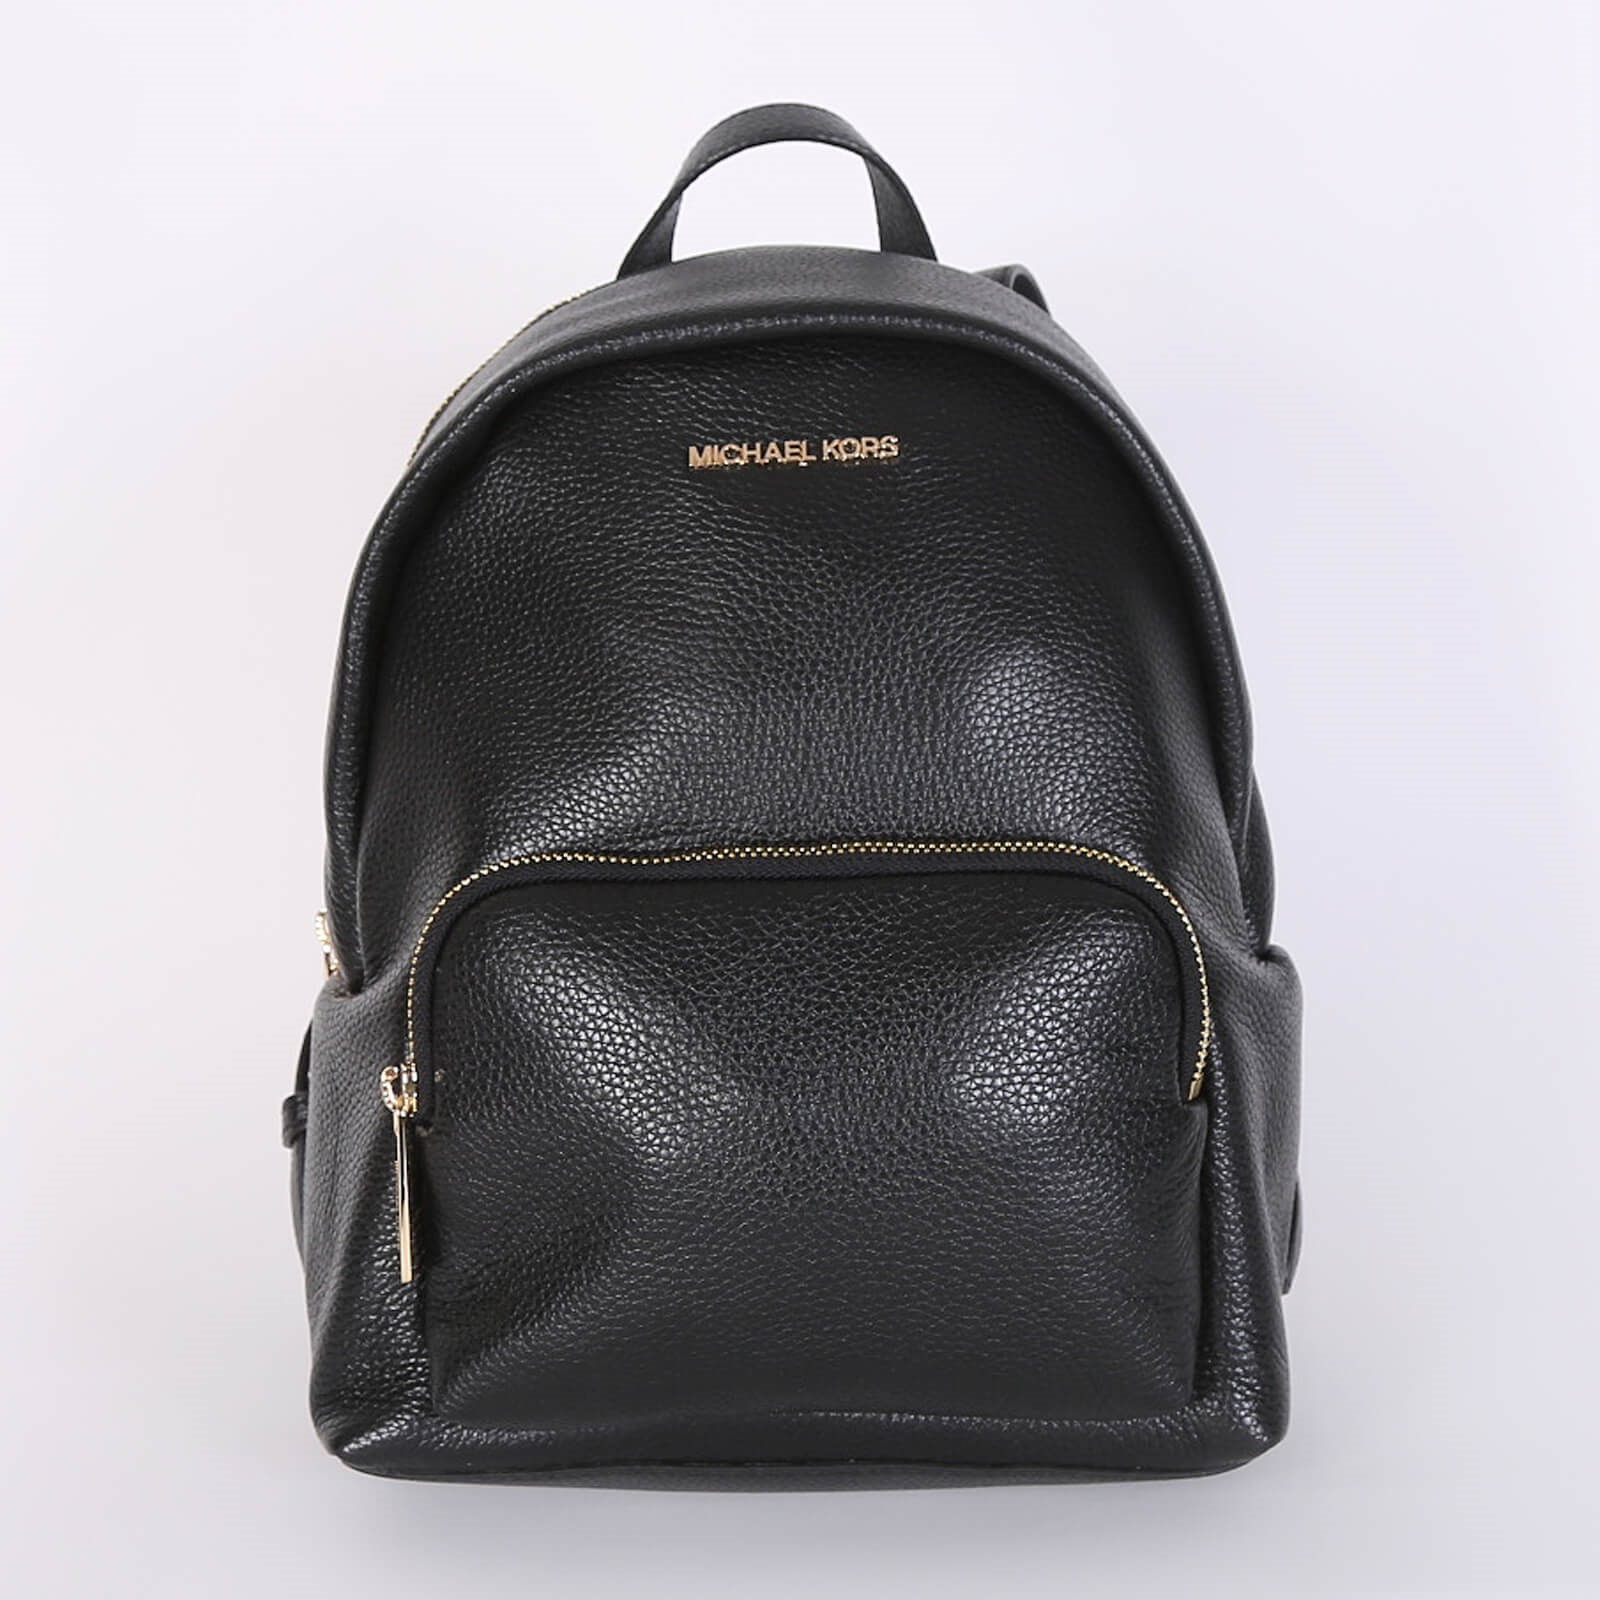 Michael Kors | Bags | Michael Kors Slater Medium Pebbled Leather Backpack  Like New Black | Poshmark